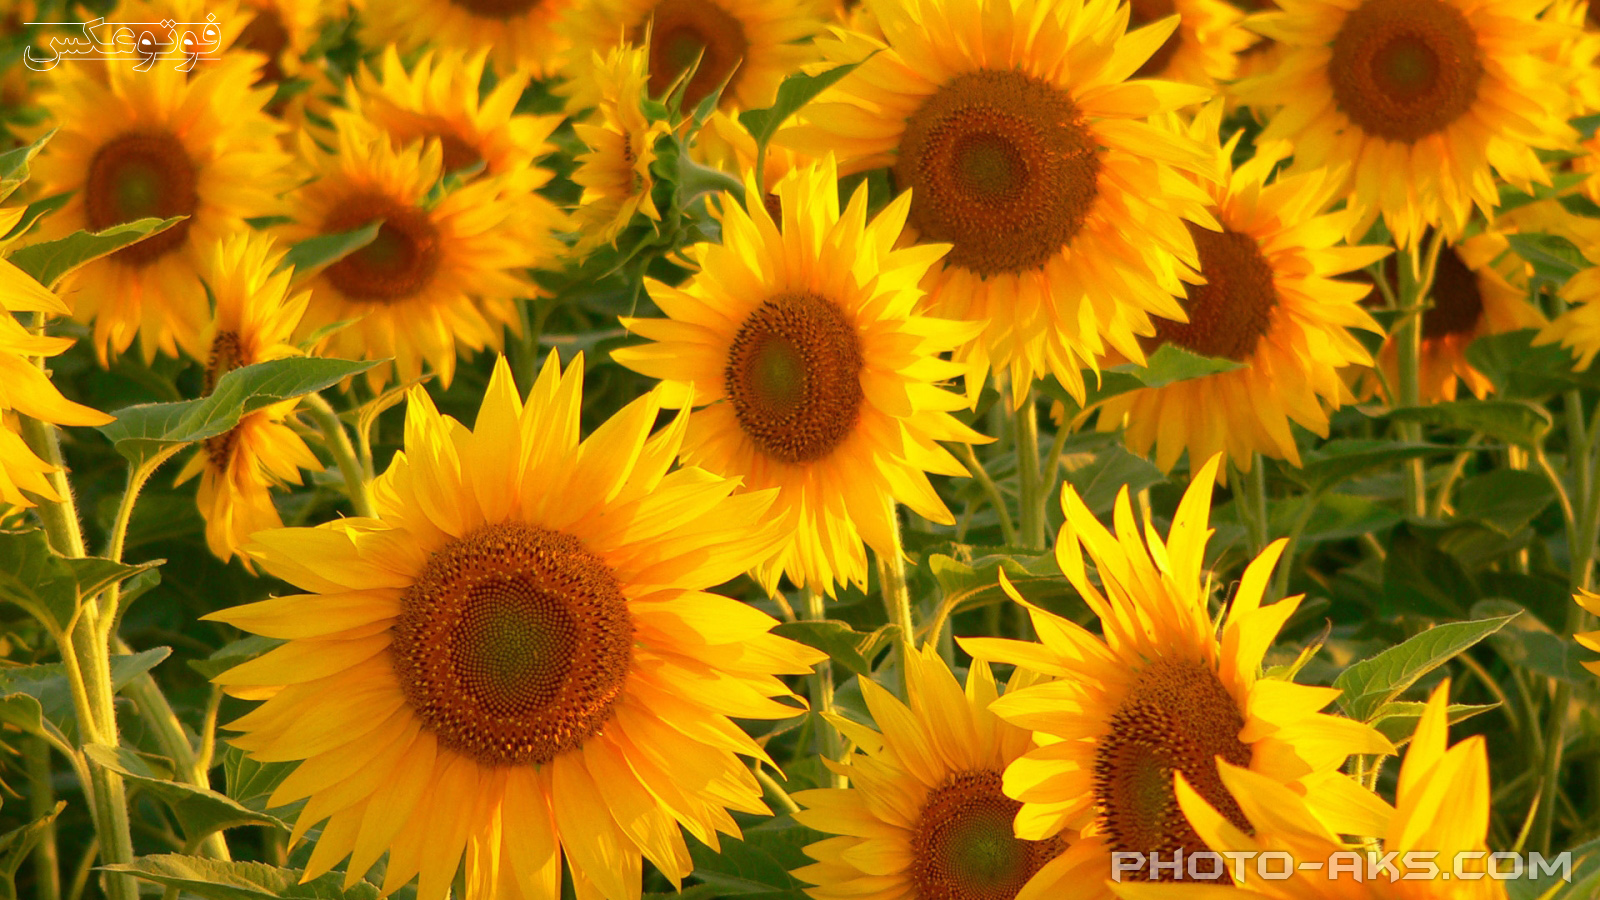 sunflowers-photo-aks.com.jpg